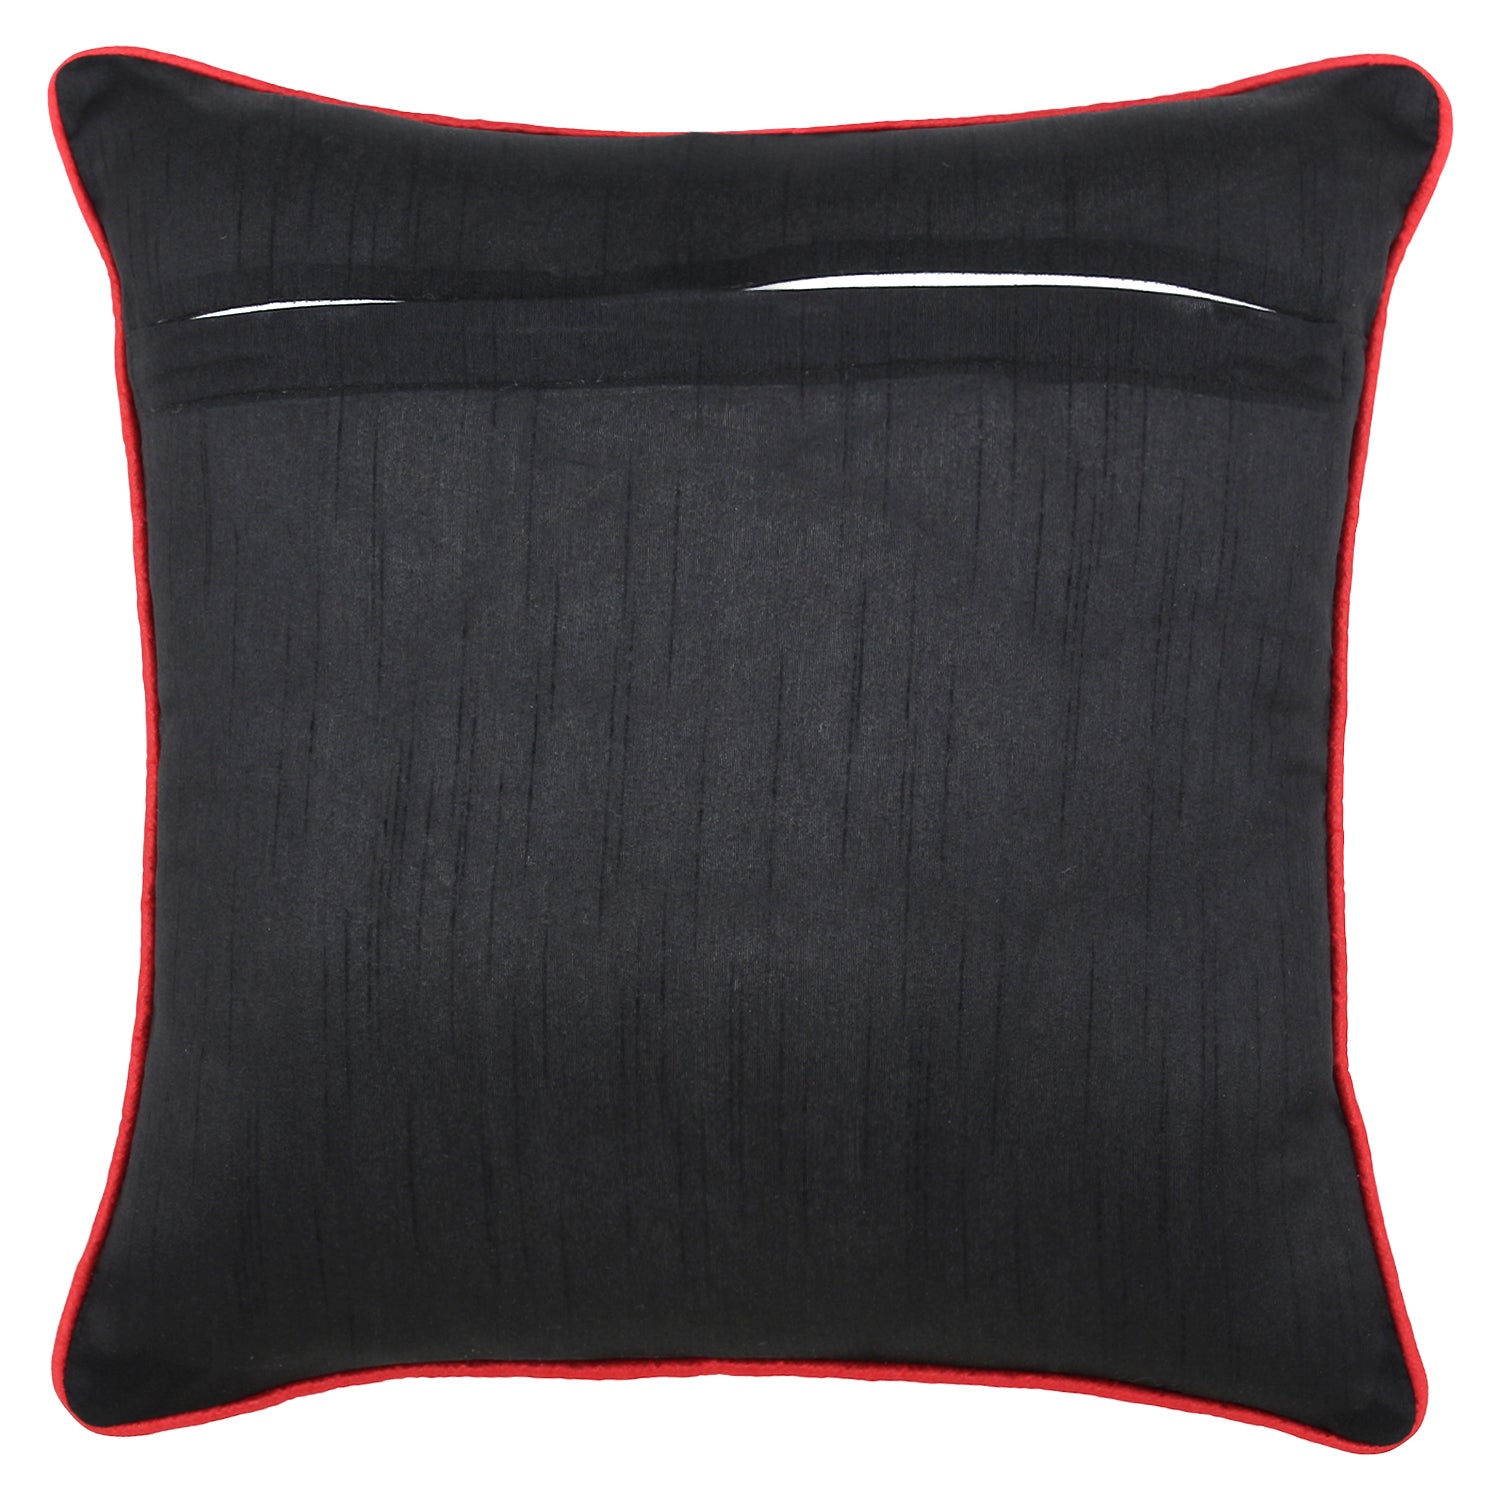 Desi Kapda Embroidered Cushions Cover